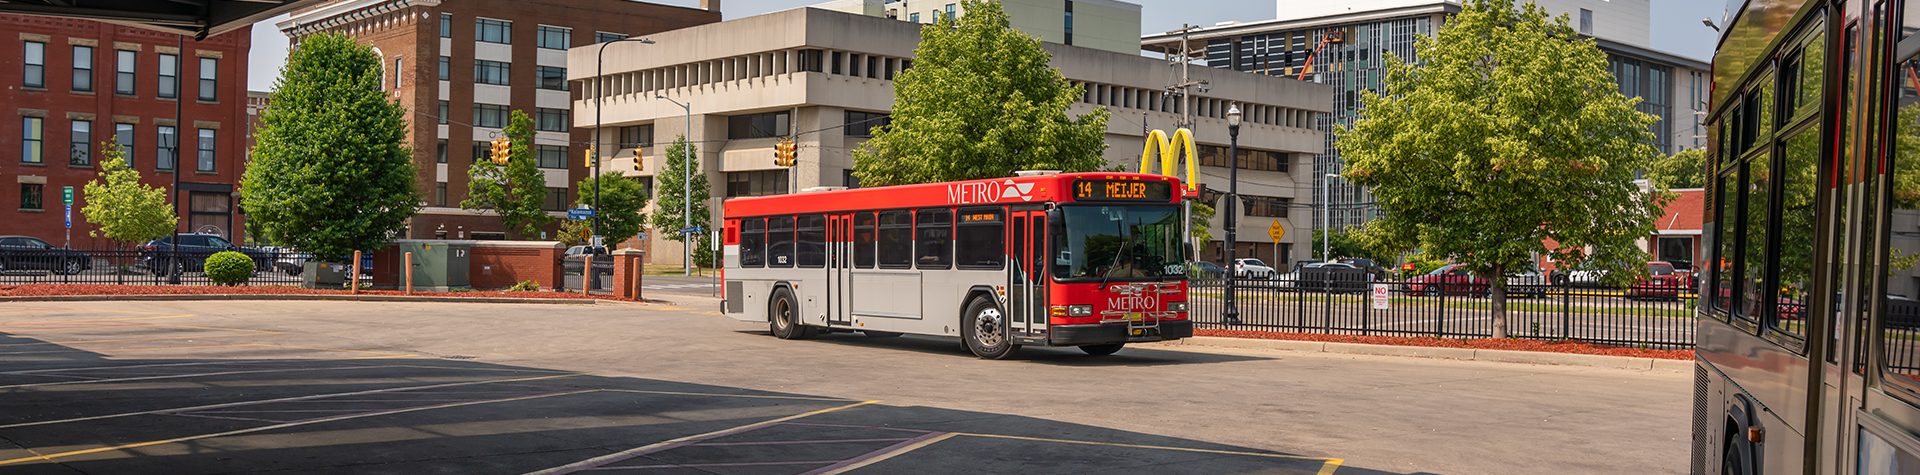 An image of a Kalamazoo Metro bus pulling into the Kalamazoo Transportation Center's bus parking.